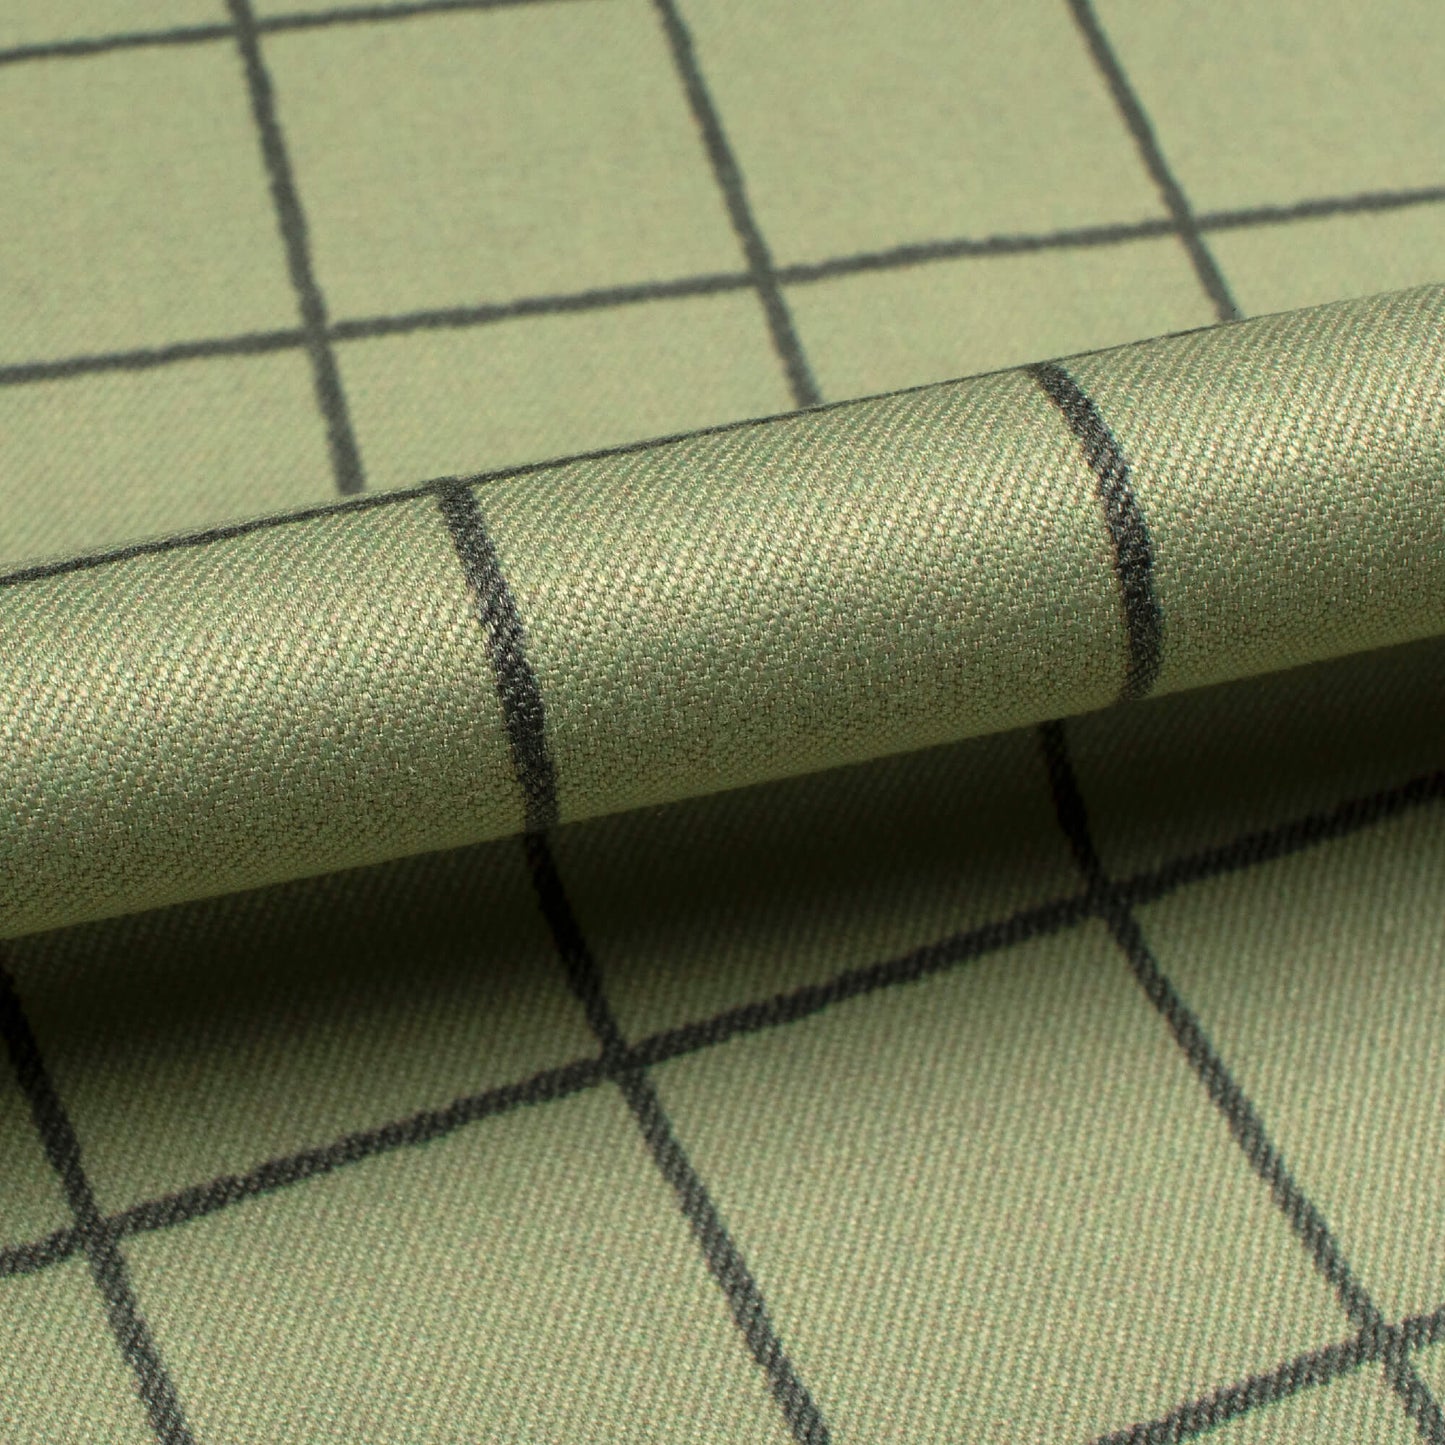 Pistachio Green Checks Printed Luxury Suiting Fabric